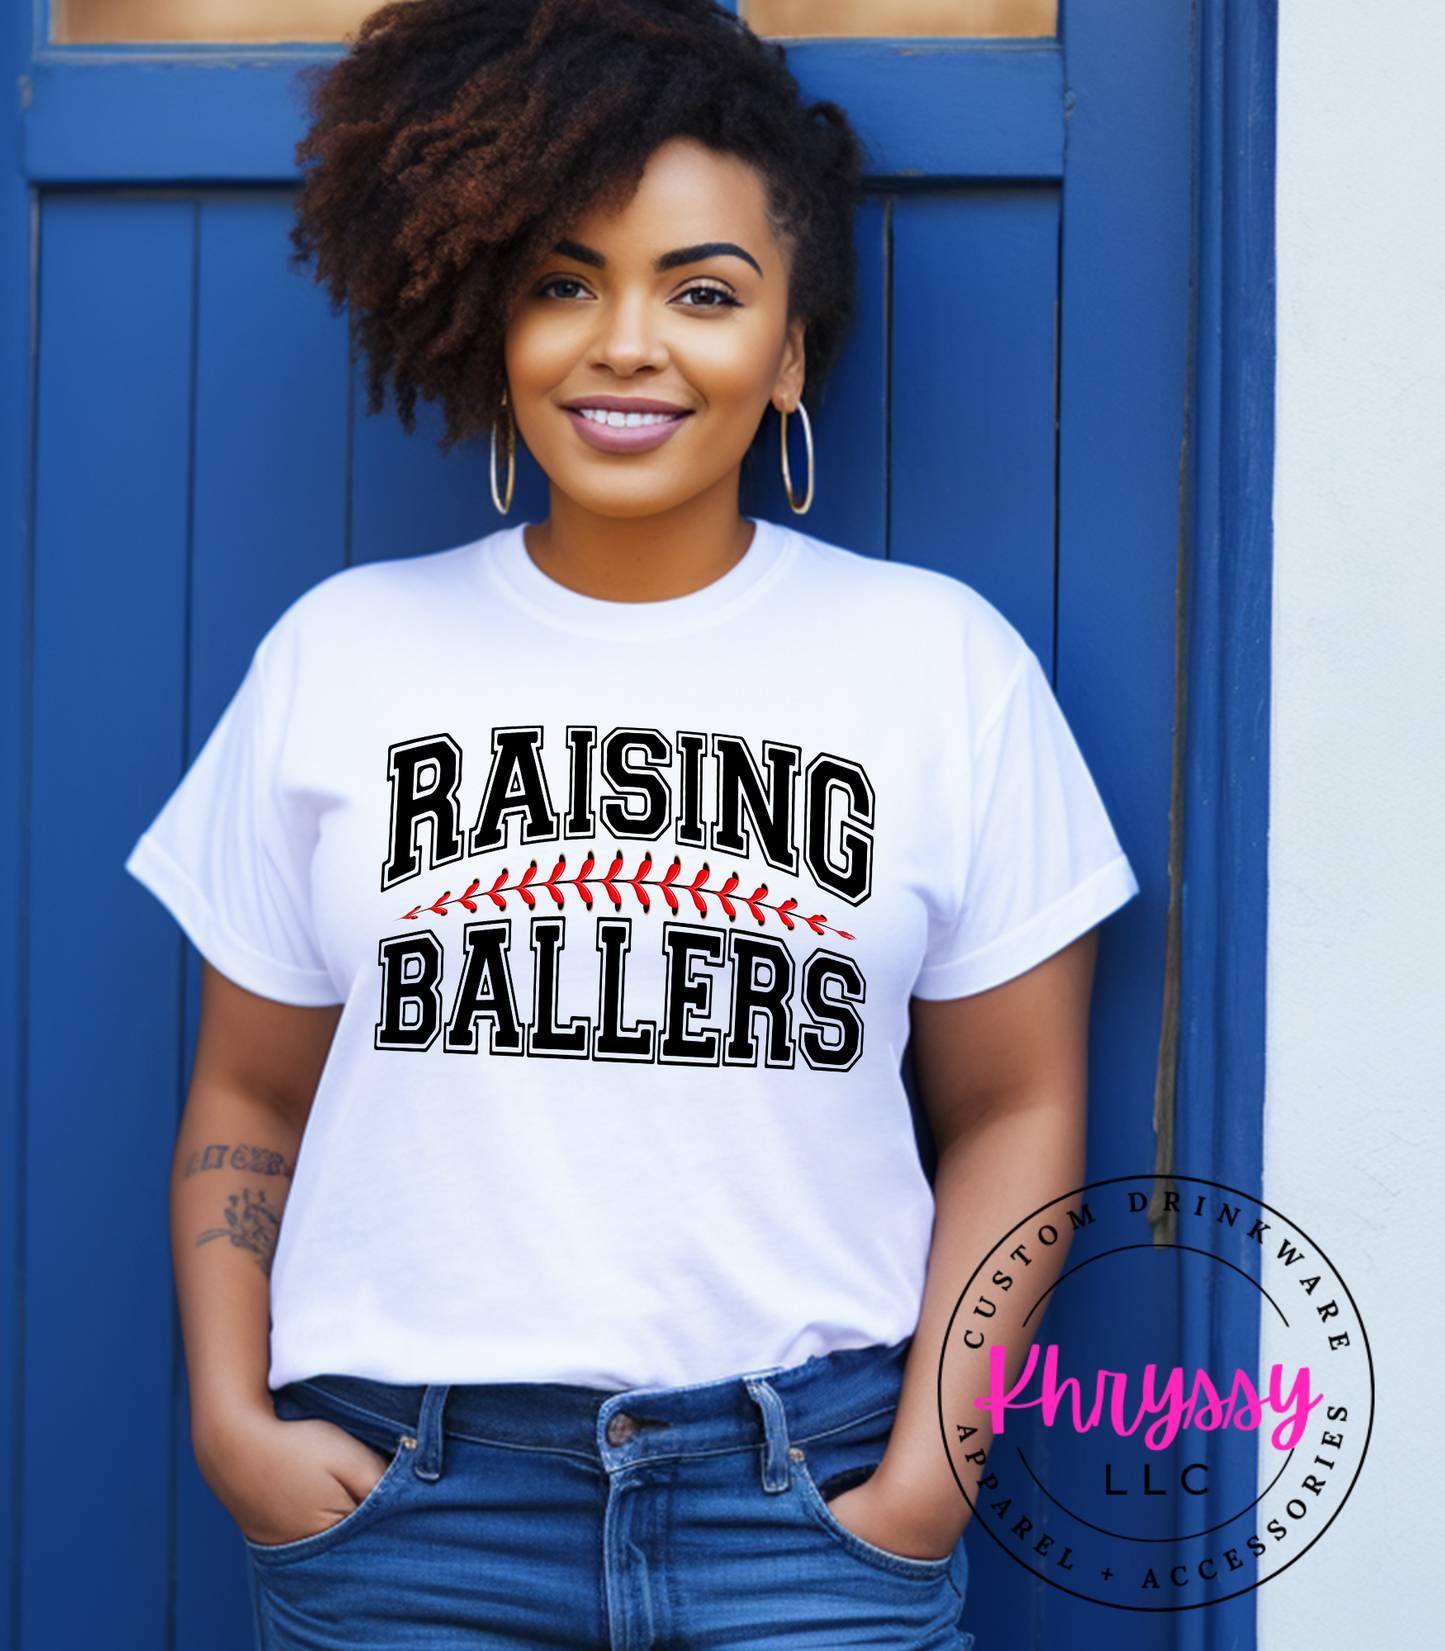 Raising Ballers Unisex Baseball Shirt